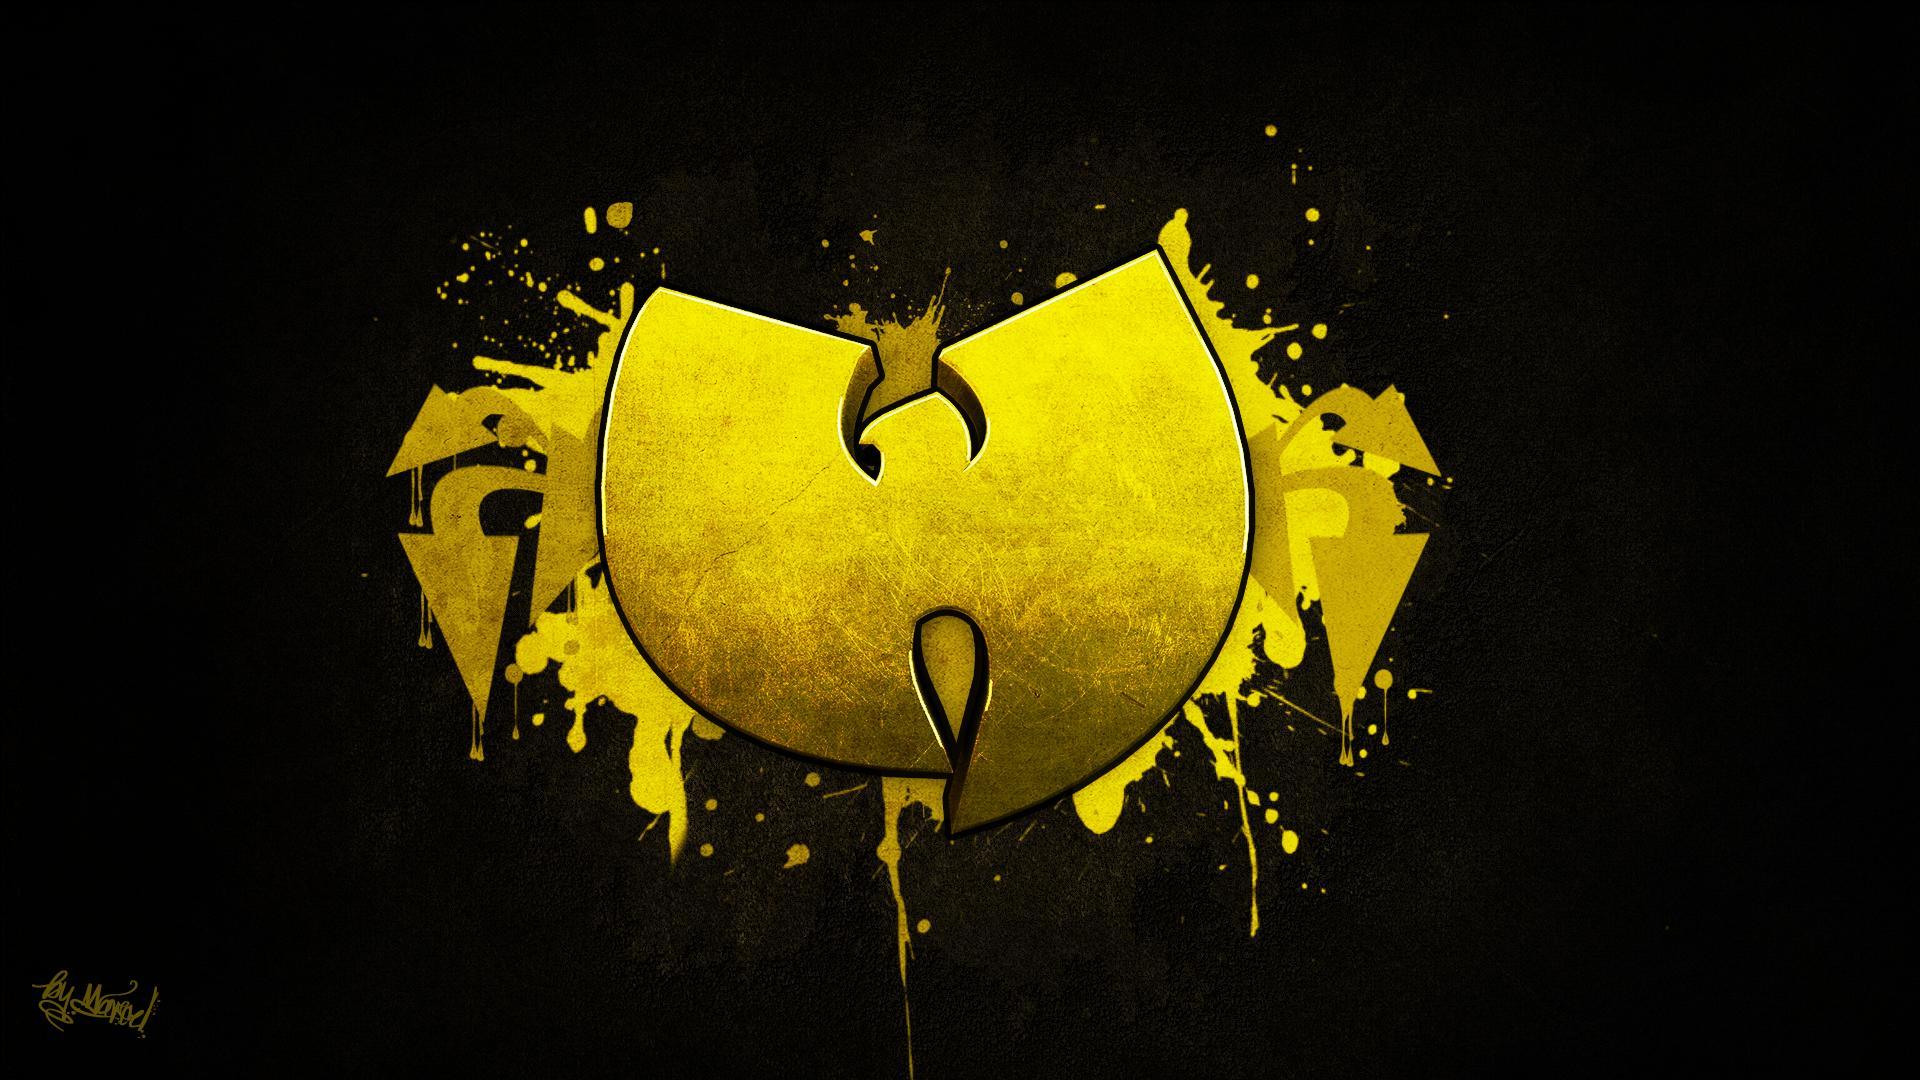 Wu-Tang Cool Logo - Wu-Tang Clan Performing 36 Chambers | The Sights & Sounds